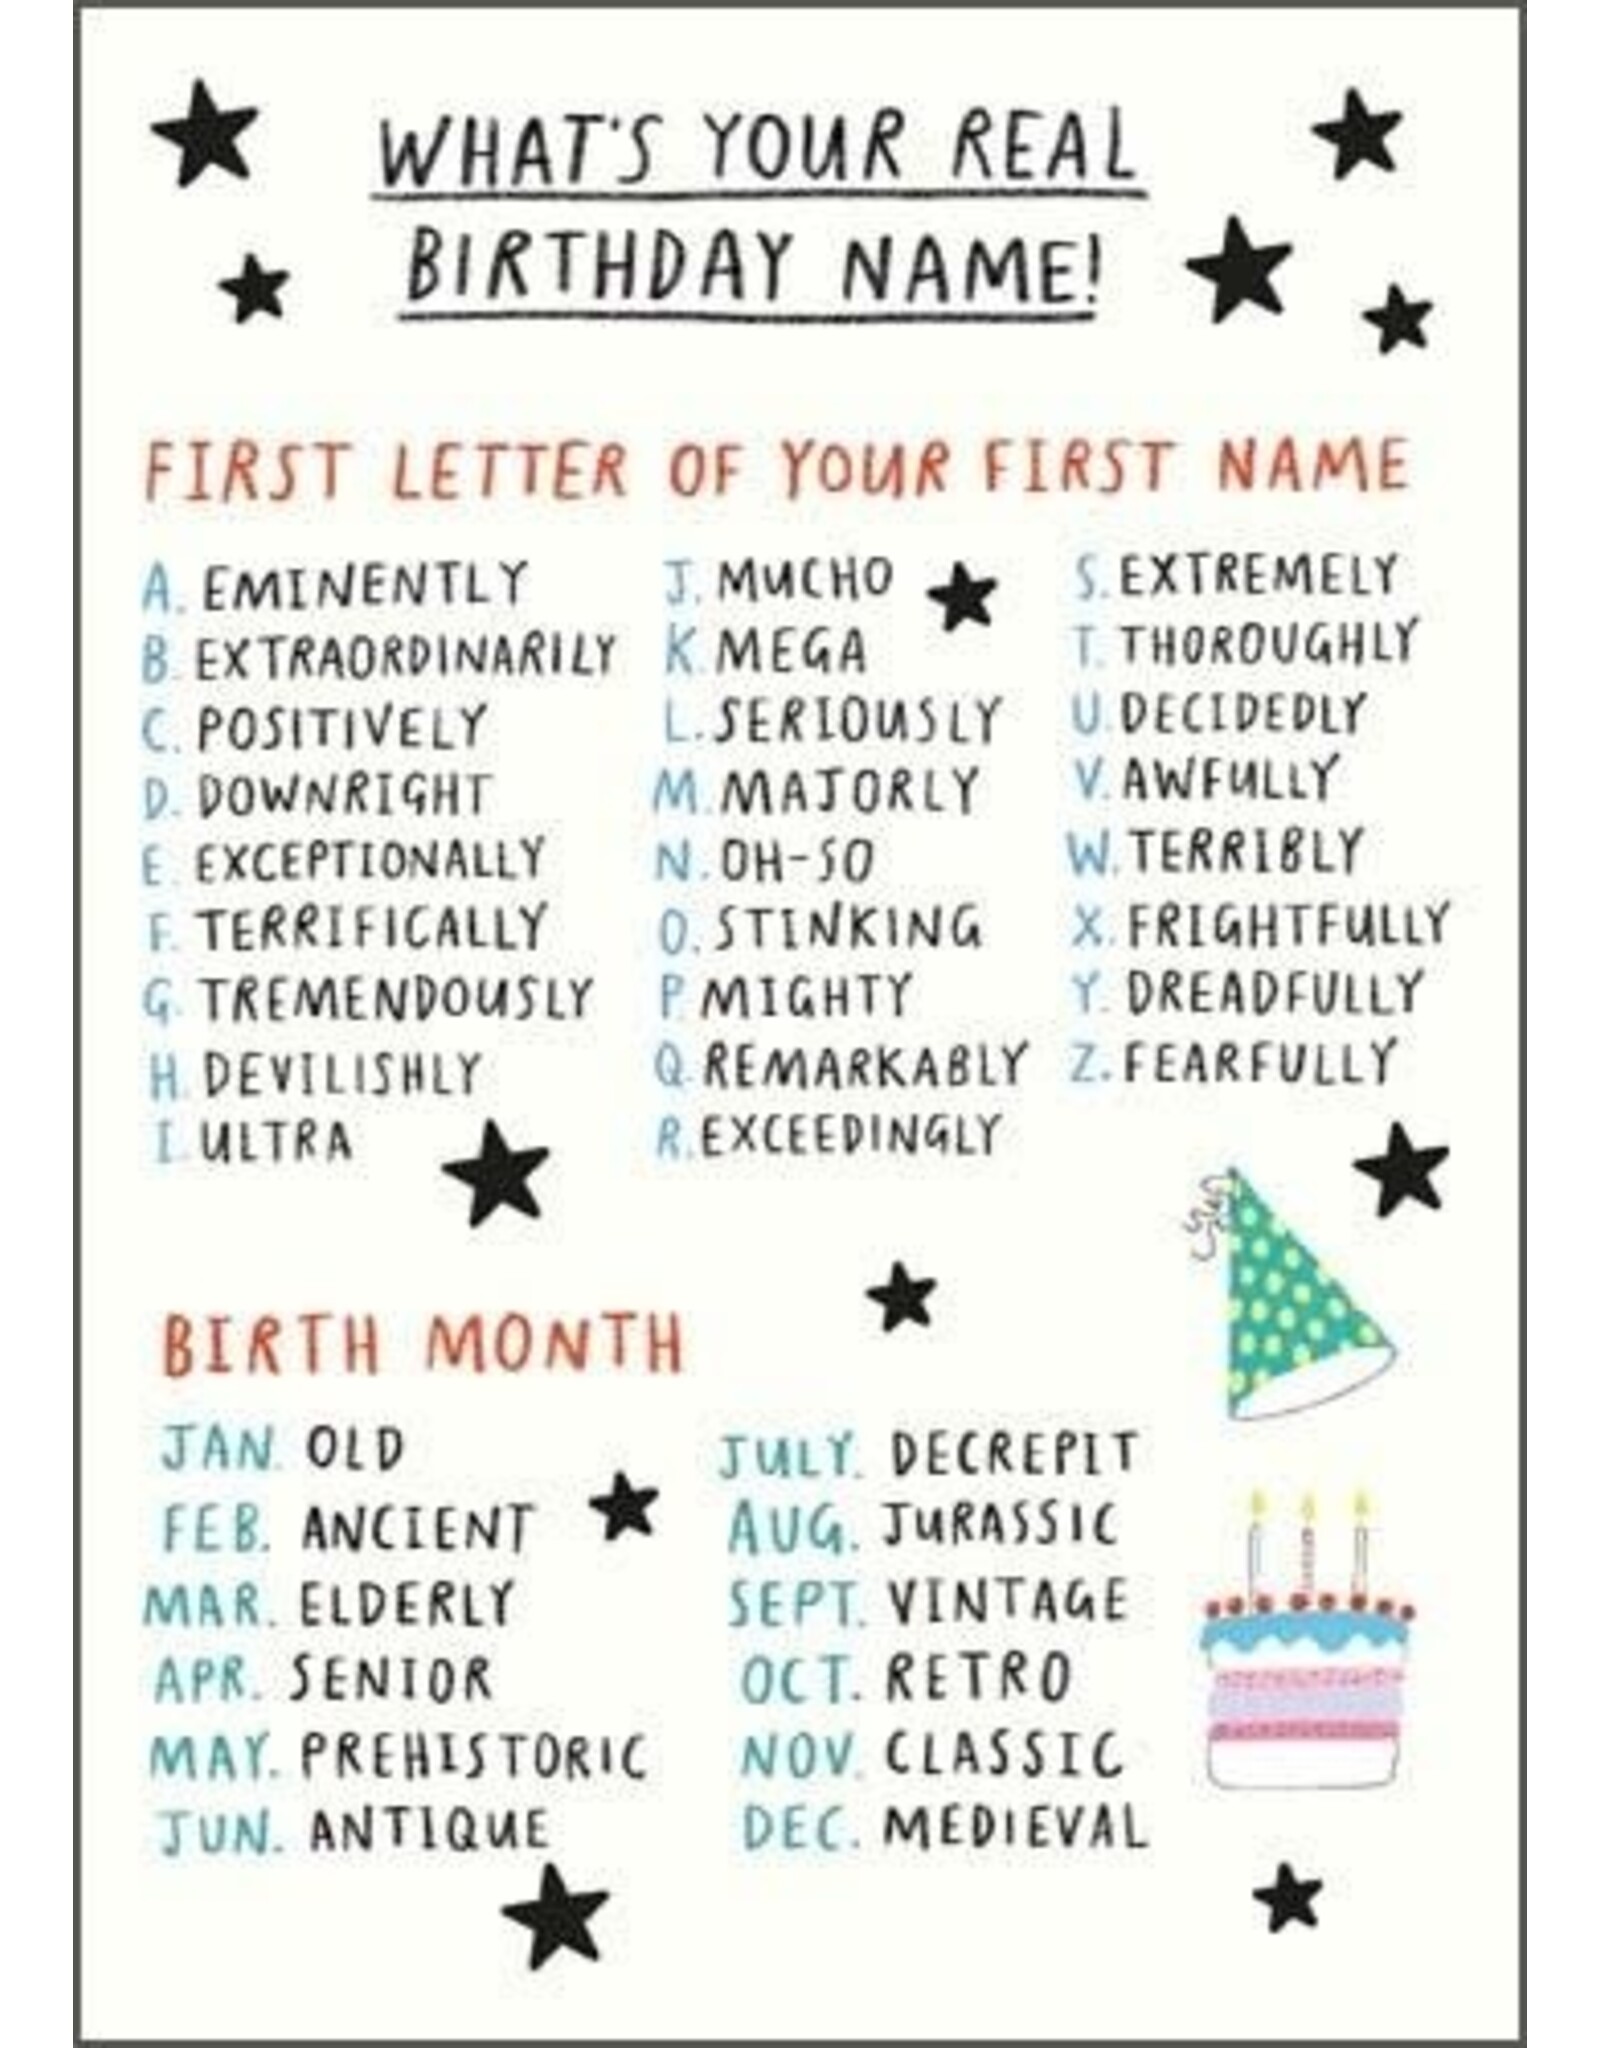 Birthday - Real Birth Name